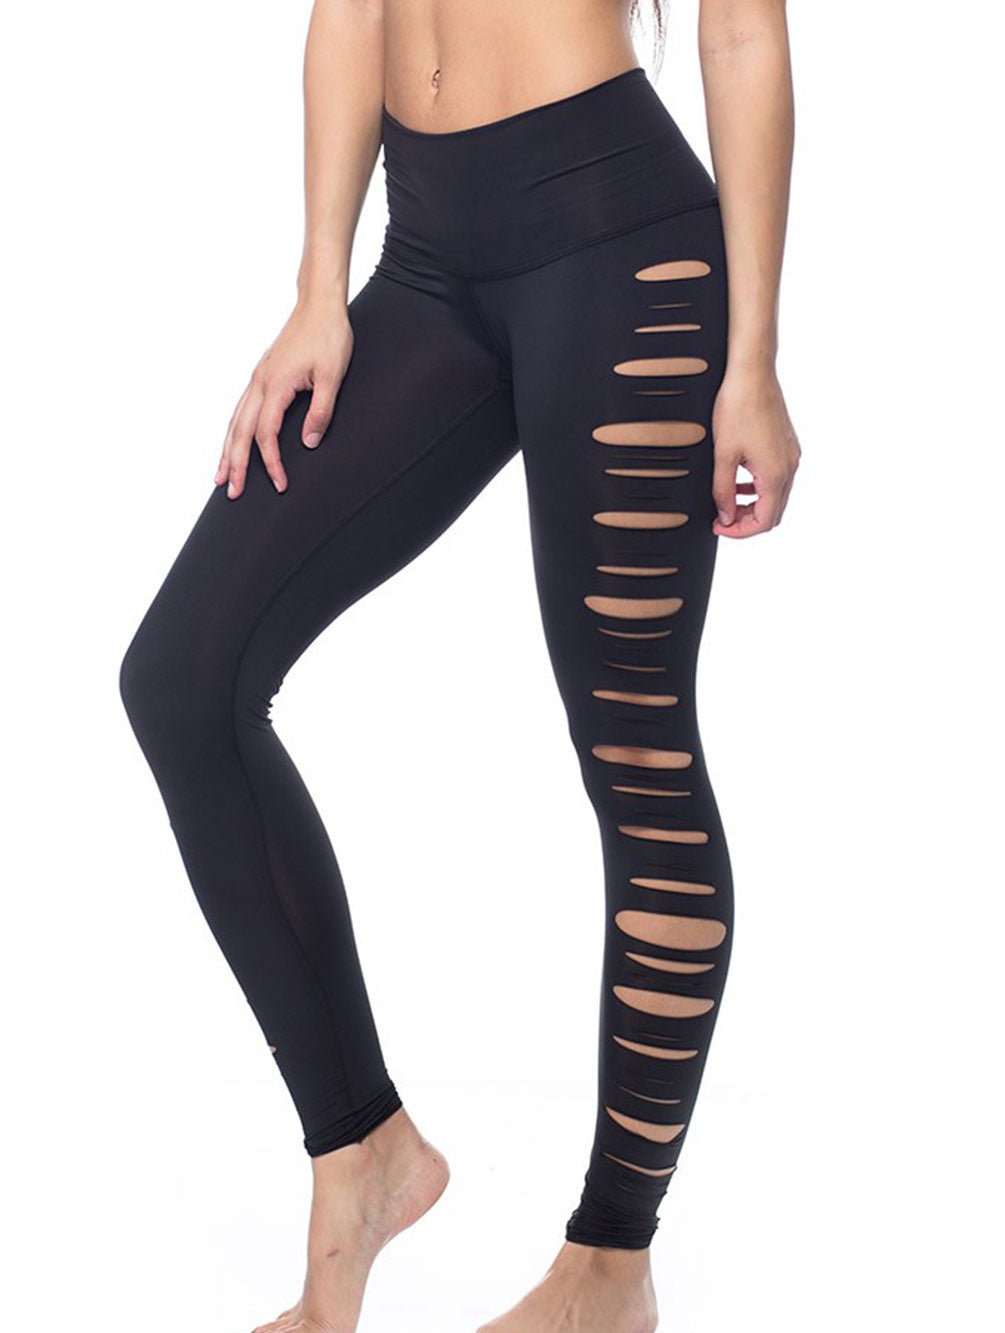 Buy AREO Yoga Pants, Women's Power Flex Yoga Pants Tummy Control Workout  Yoga Designer yoga, work out pant(BLACK;M) at Amazon.in